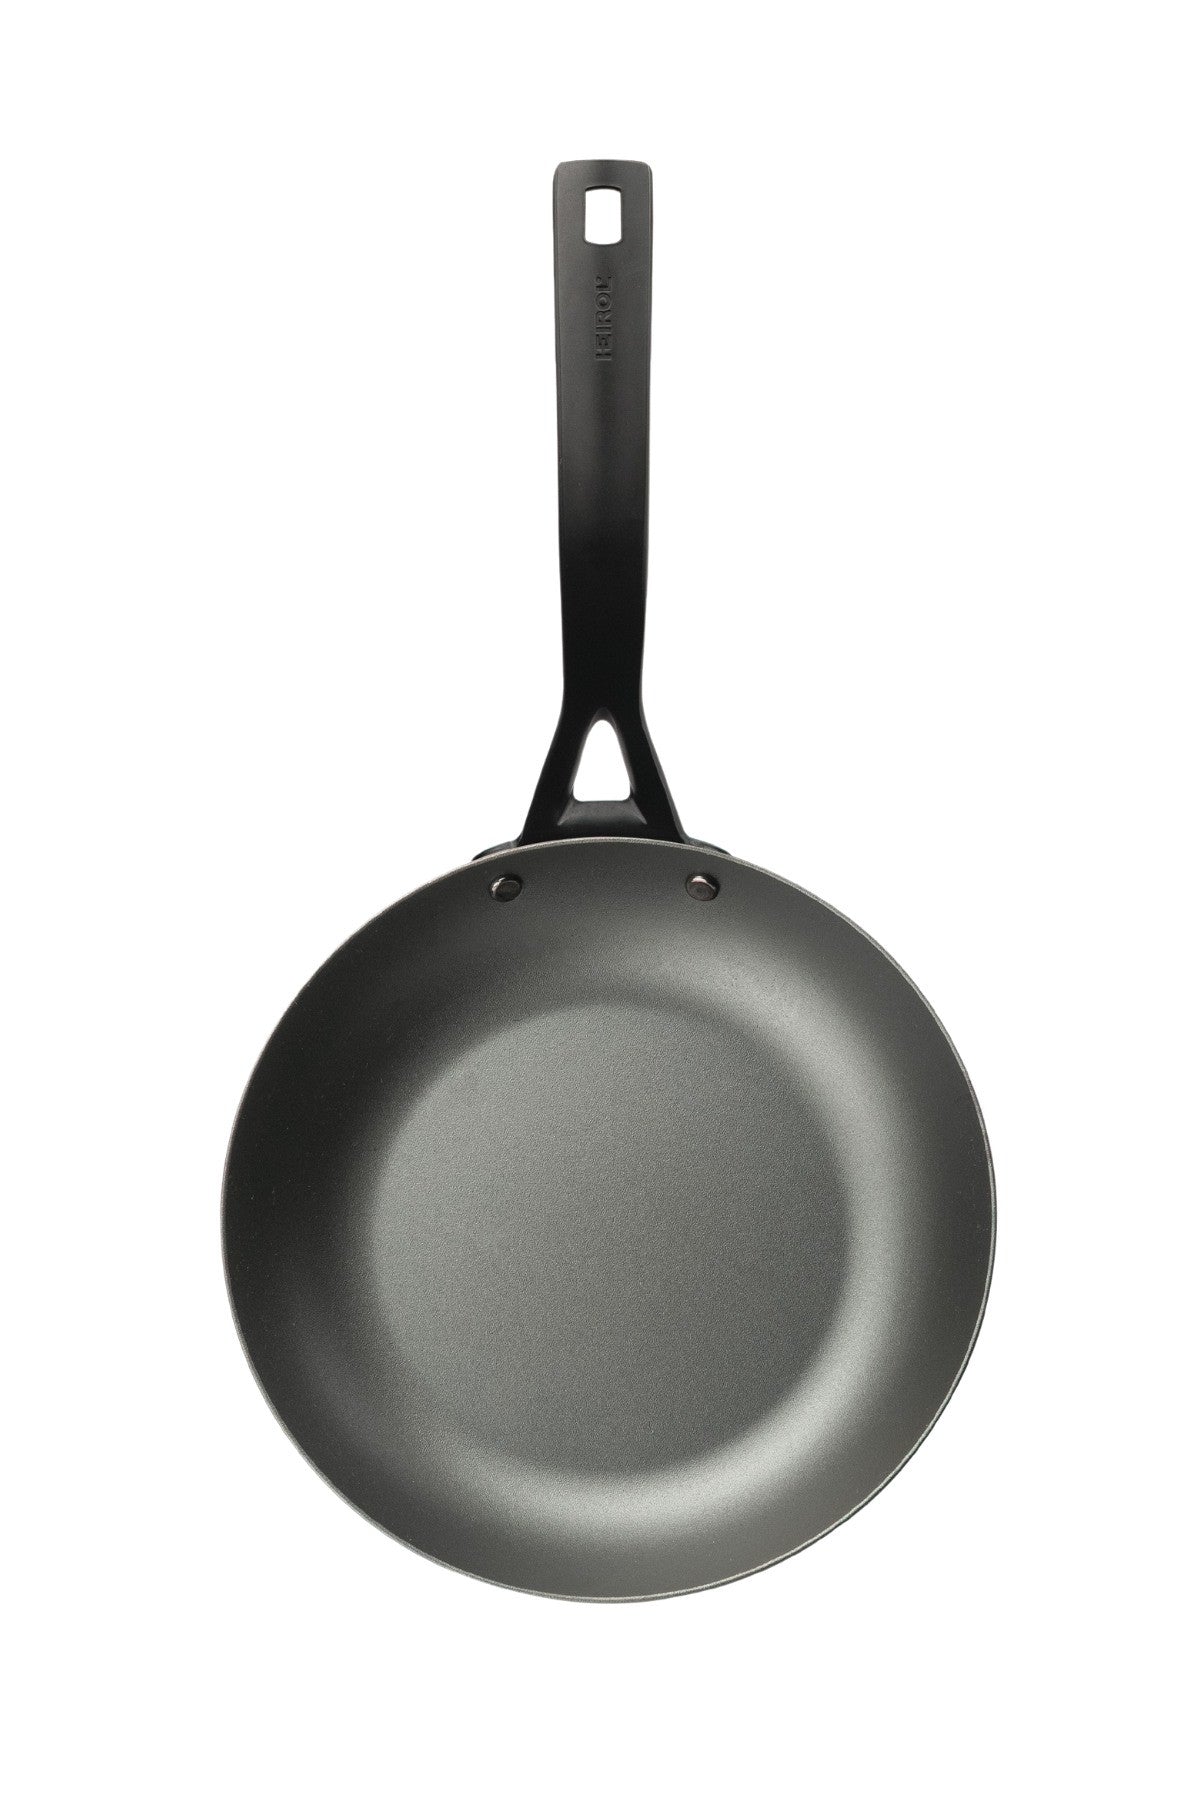 FRYING PAN 24 cm Blacksteel Pro